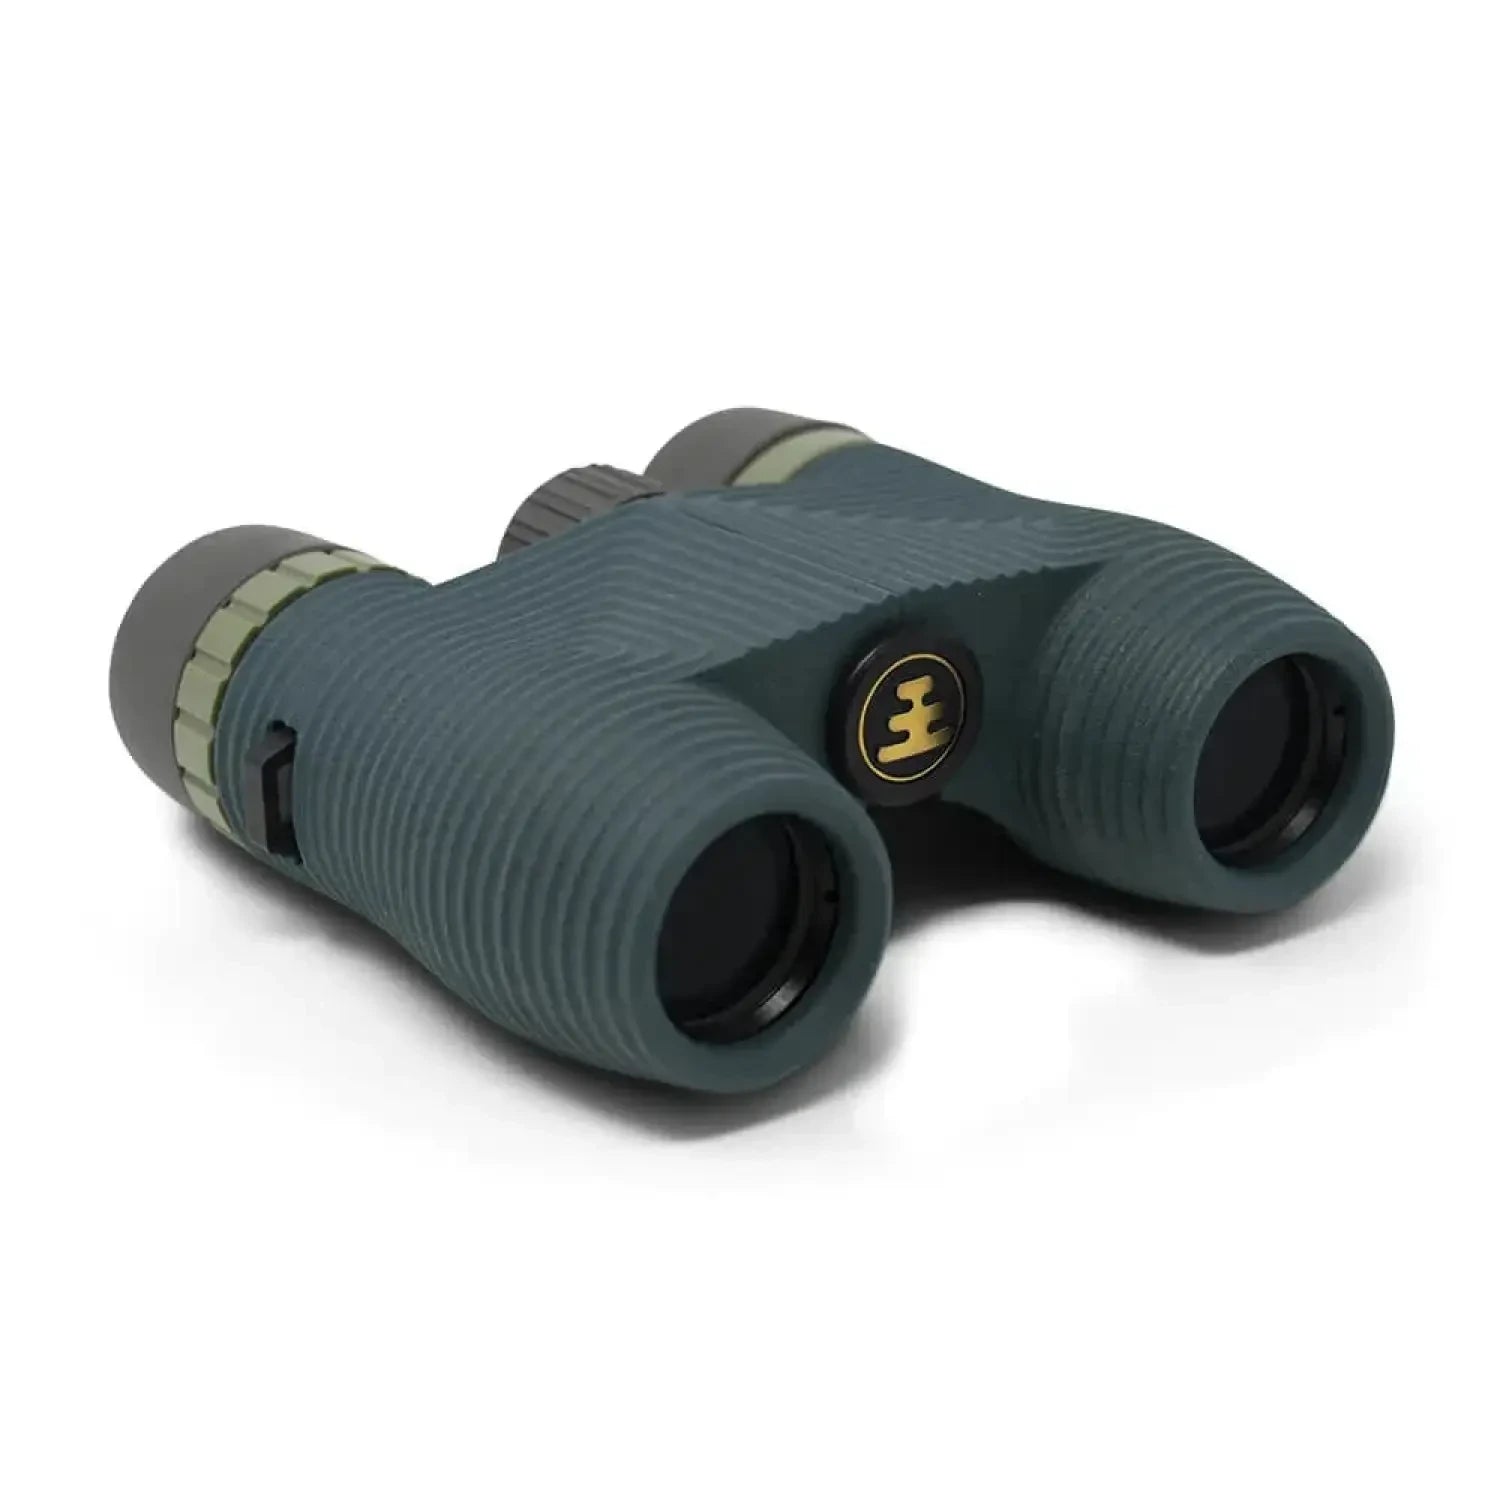 Standard Issue 8x25 Waterproof Binoculars